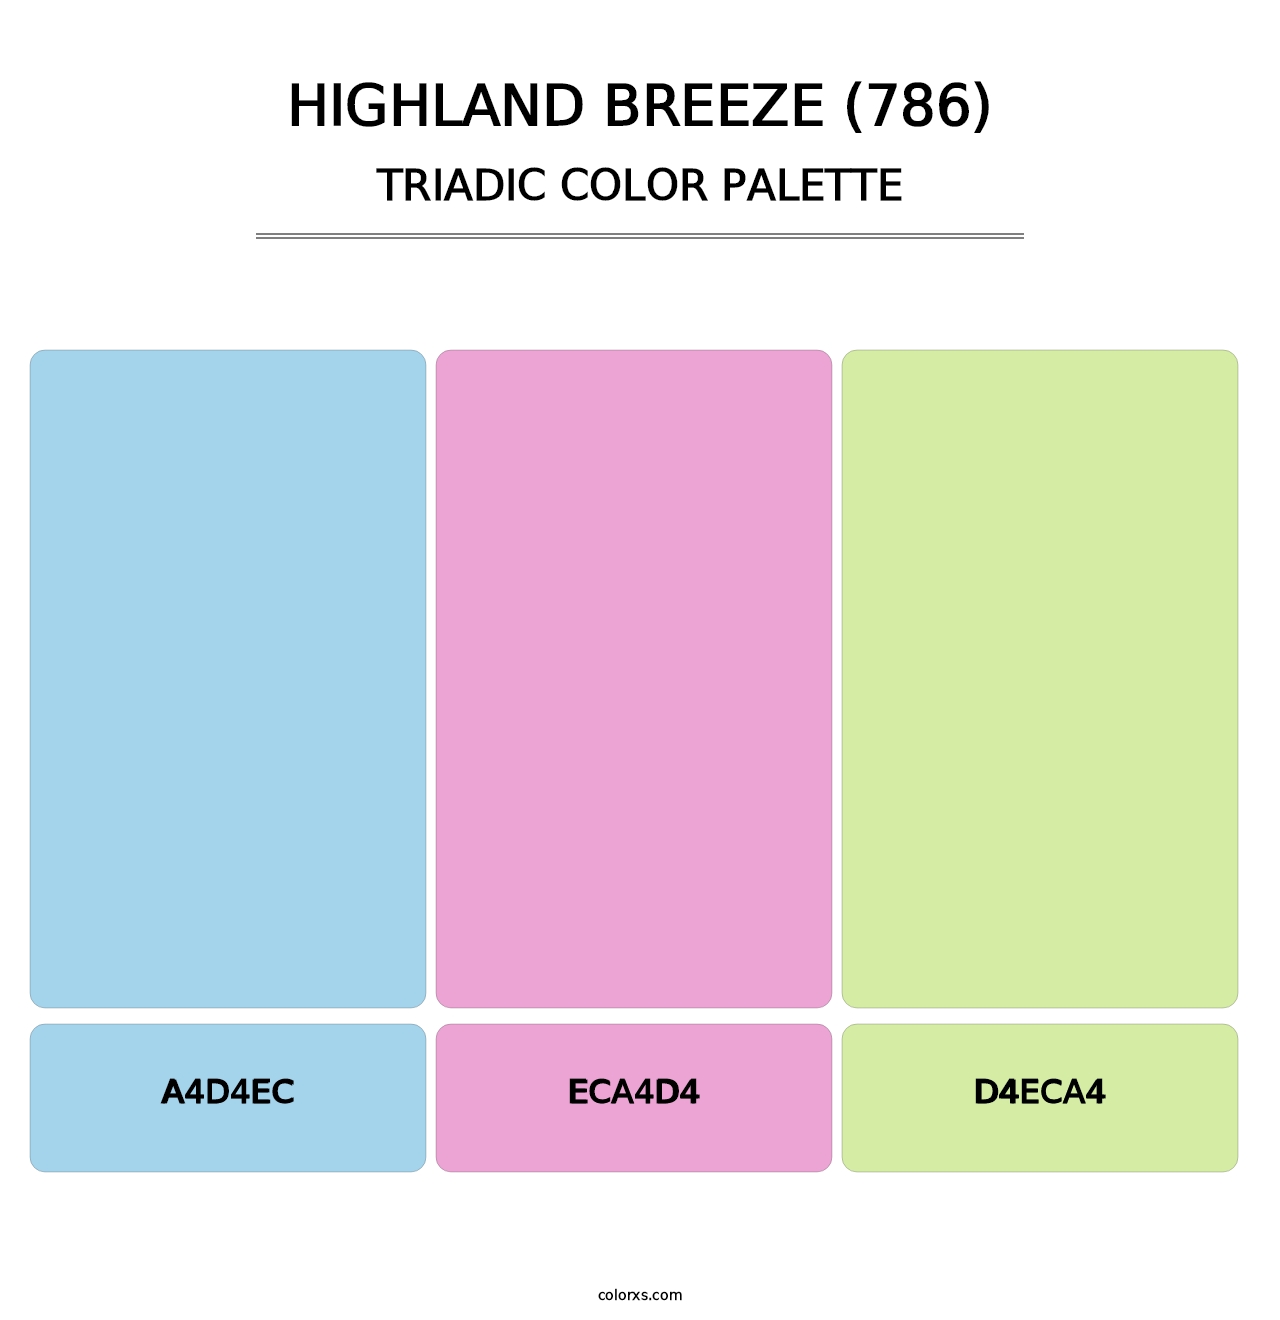 Highland Breeze (786) - Triadic Color Palette